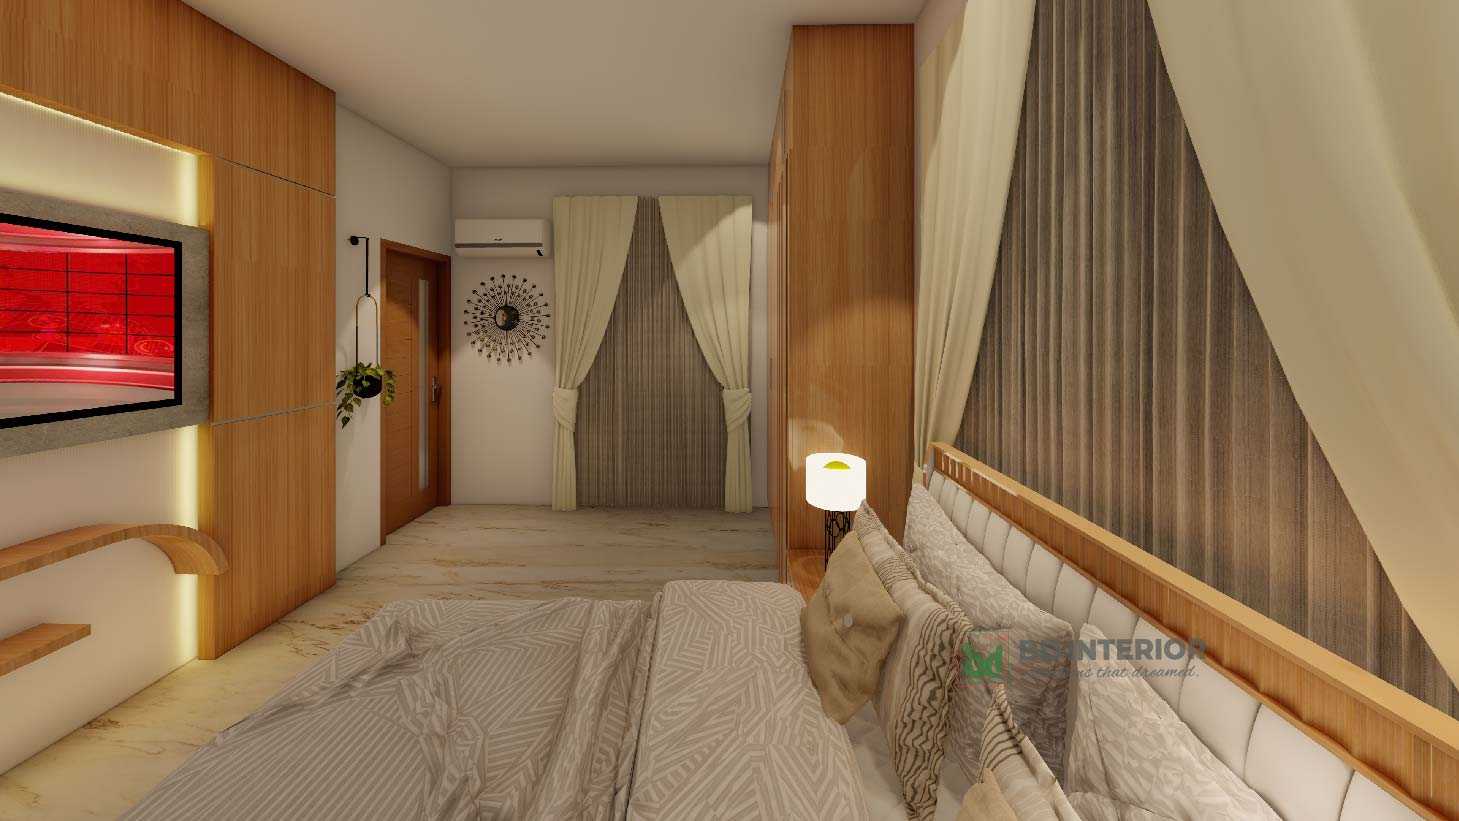 master bed room interior design for home decoration